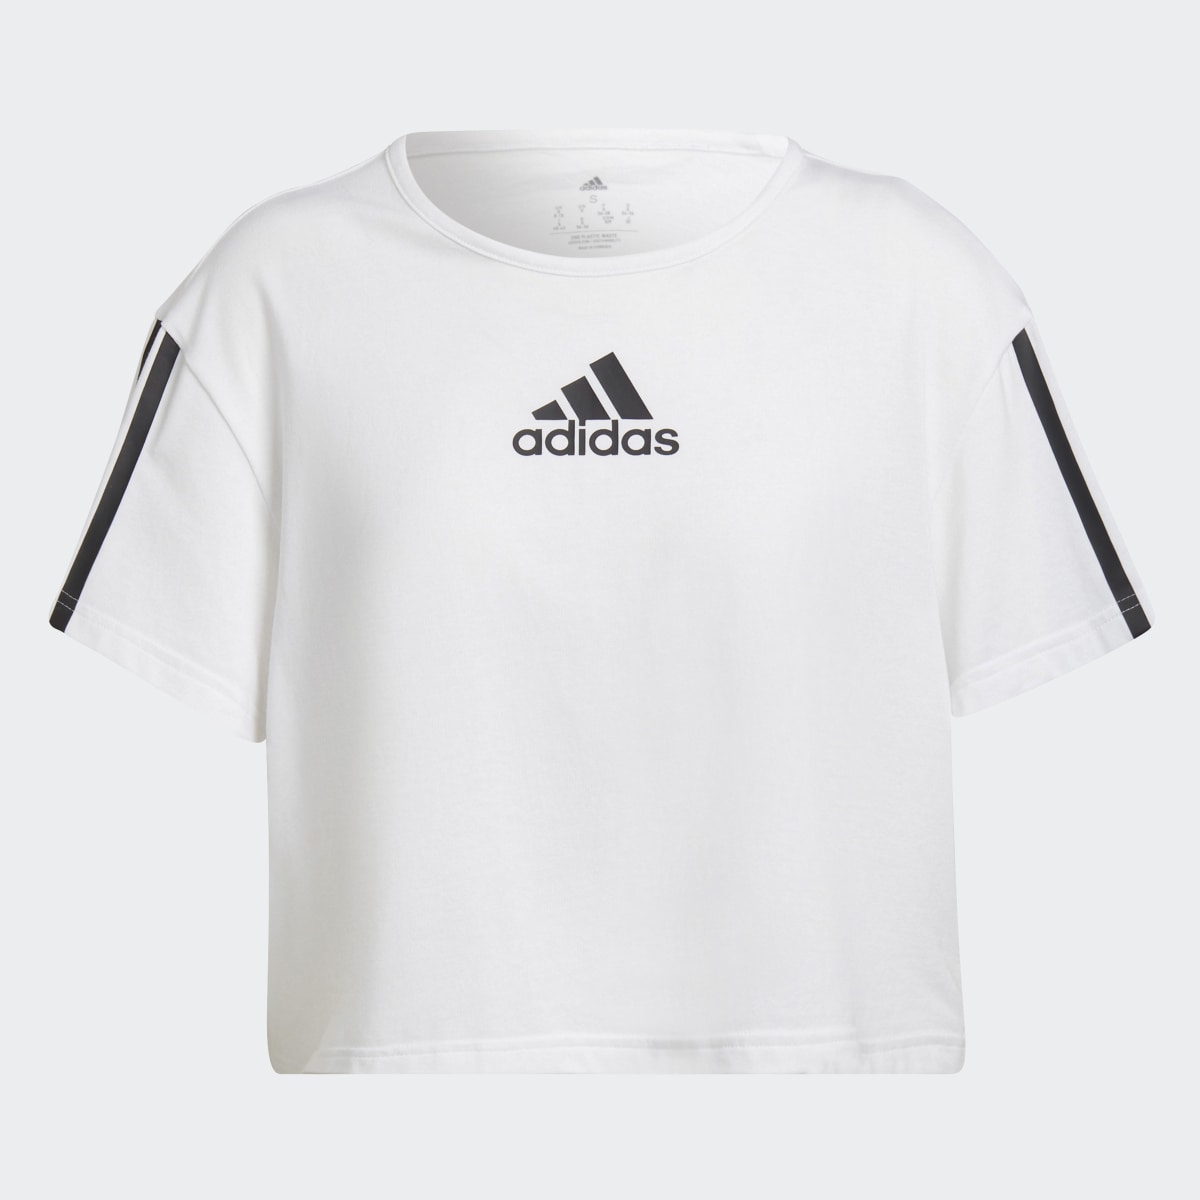 Adidas T-shirt Curta AEROREADY Made for Training. 6